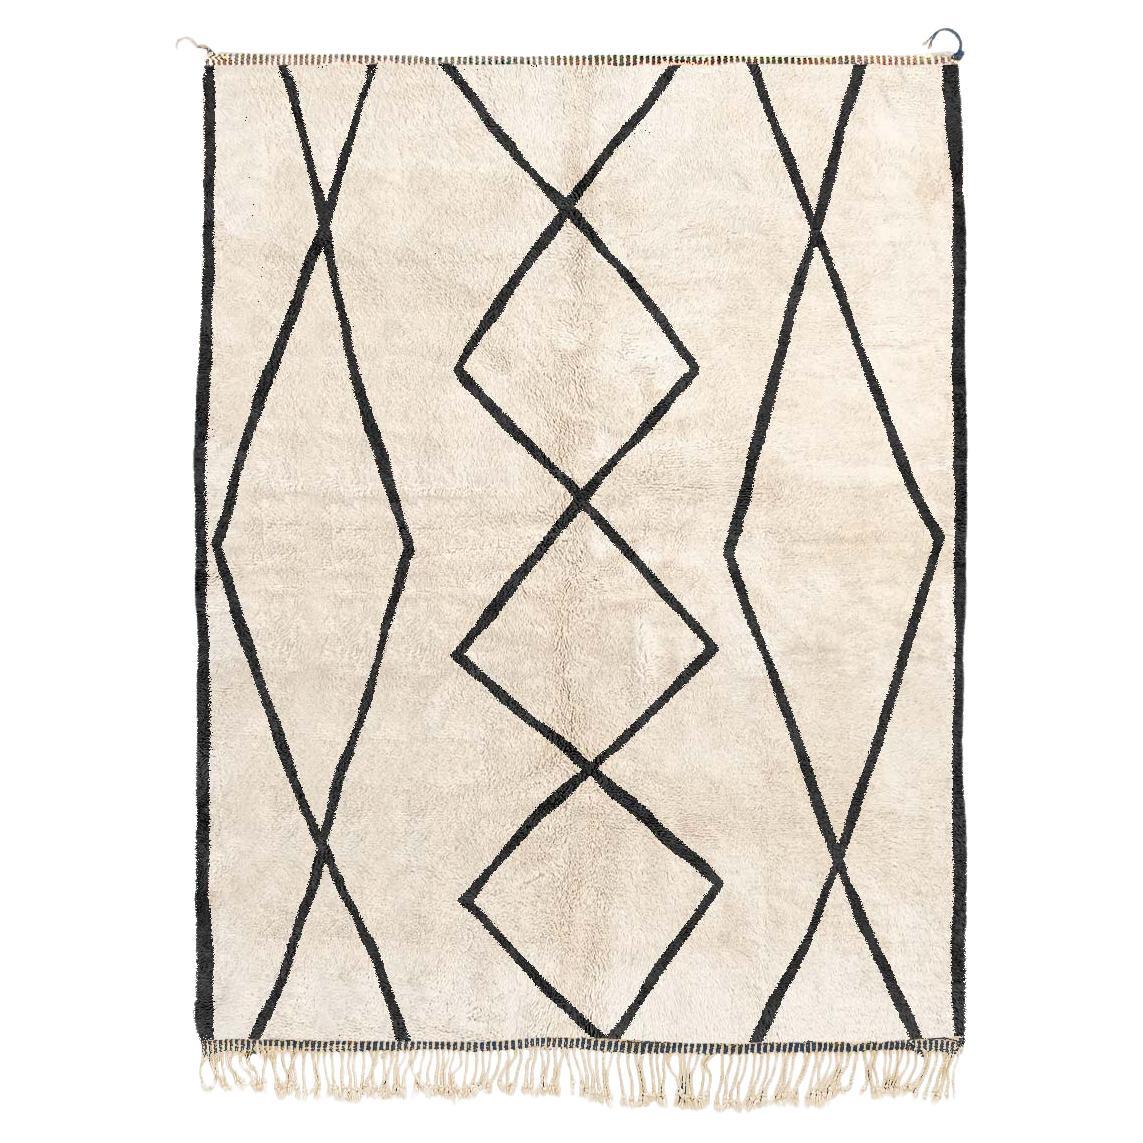 Moroccan Beni Mrirt rug 6’x9’, Black Diamond Pattern Shag rug, Custom-Made For Sale